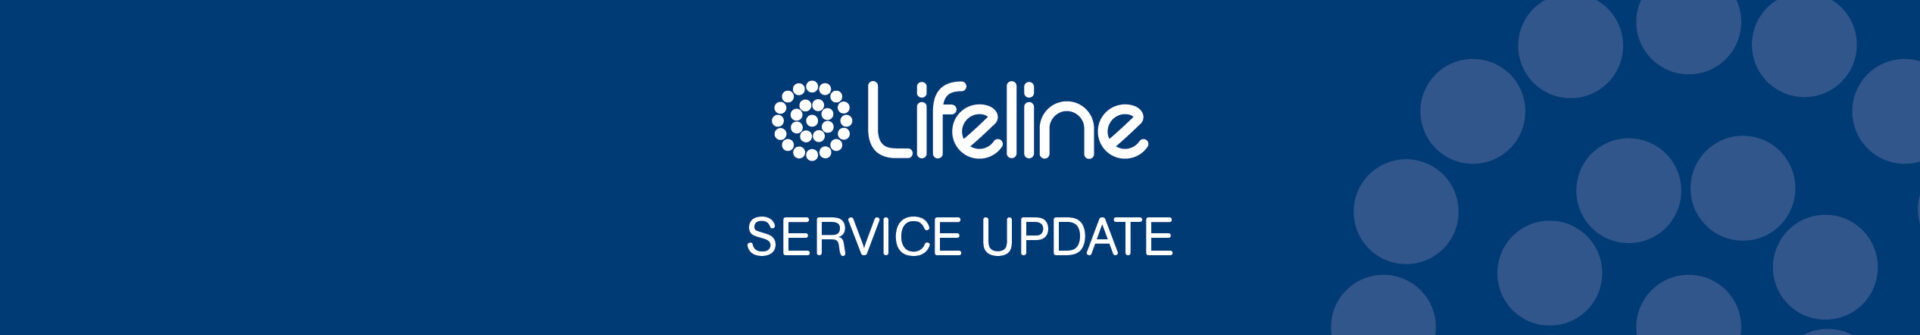 Lifeline service update